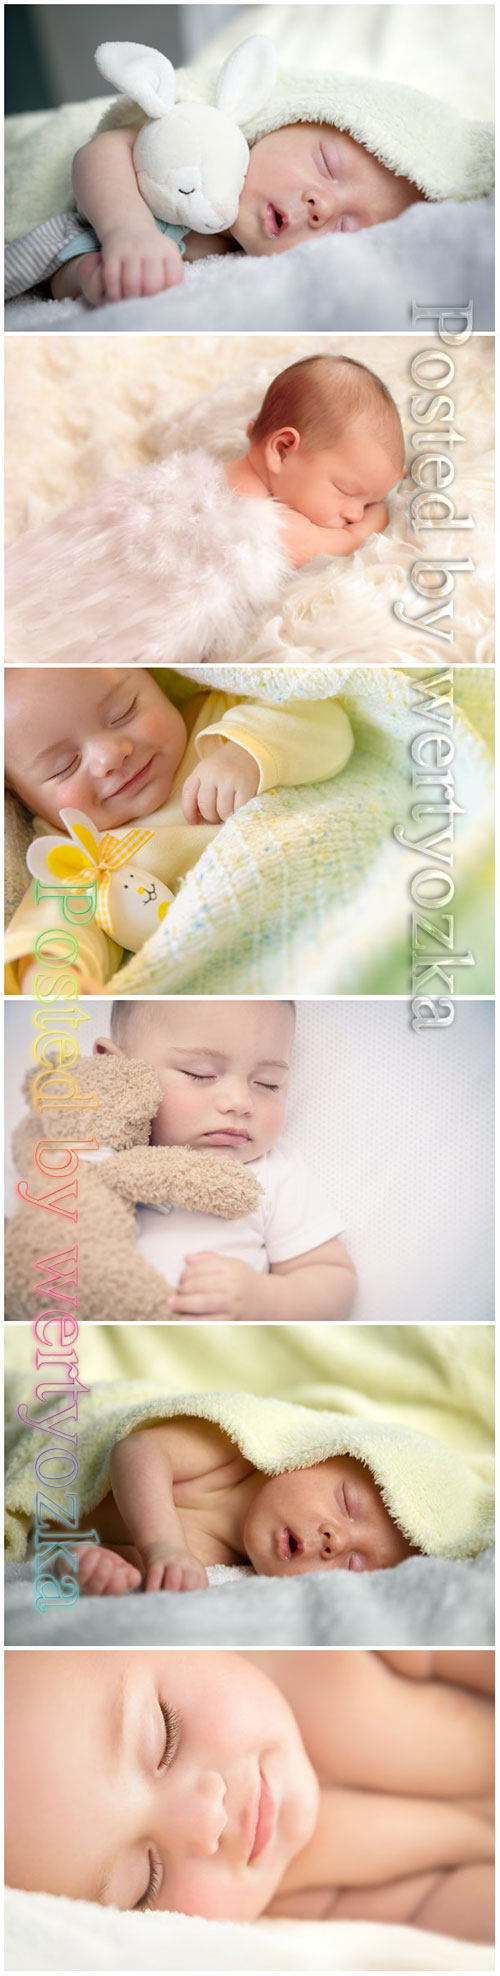 Cute little baby sleeping beautiful stock photo